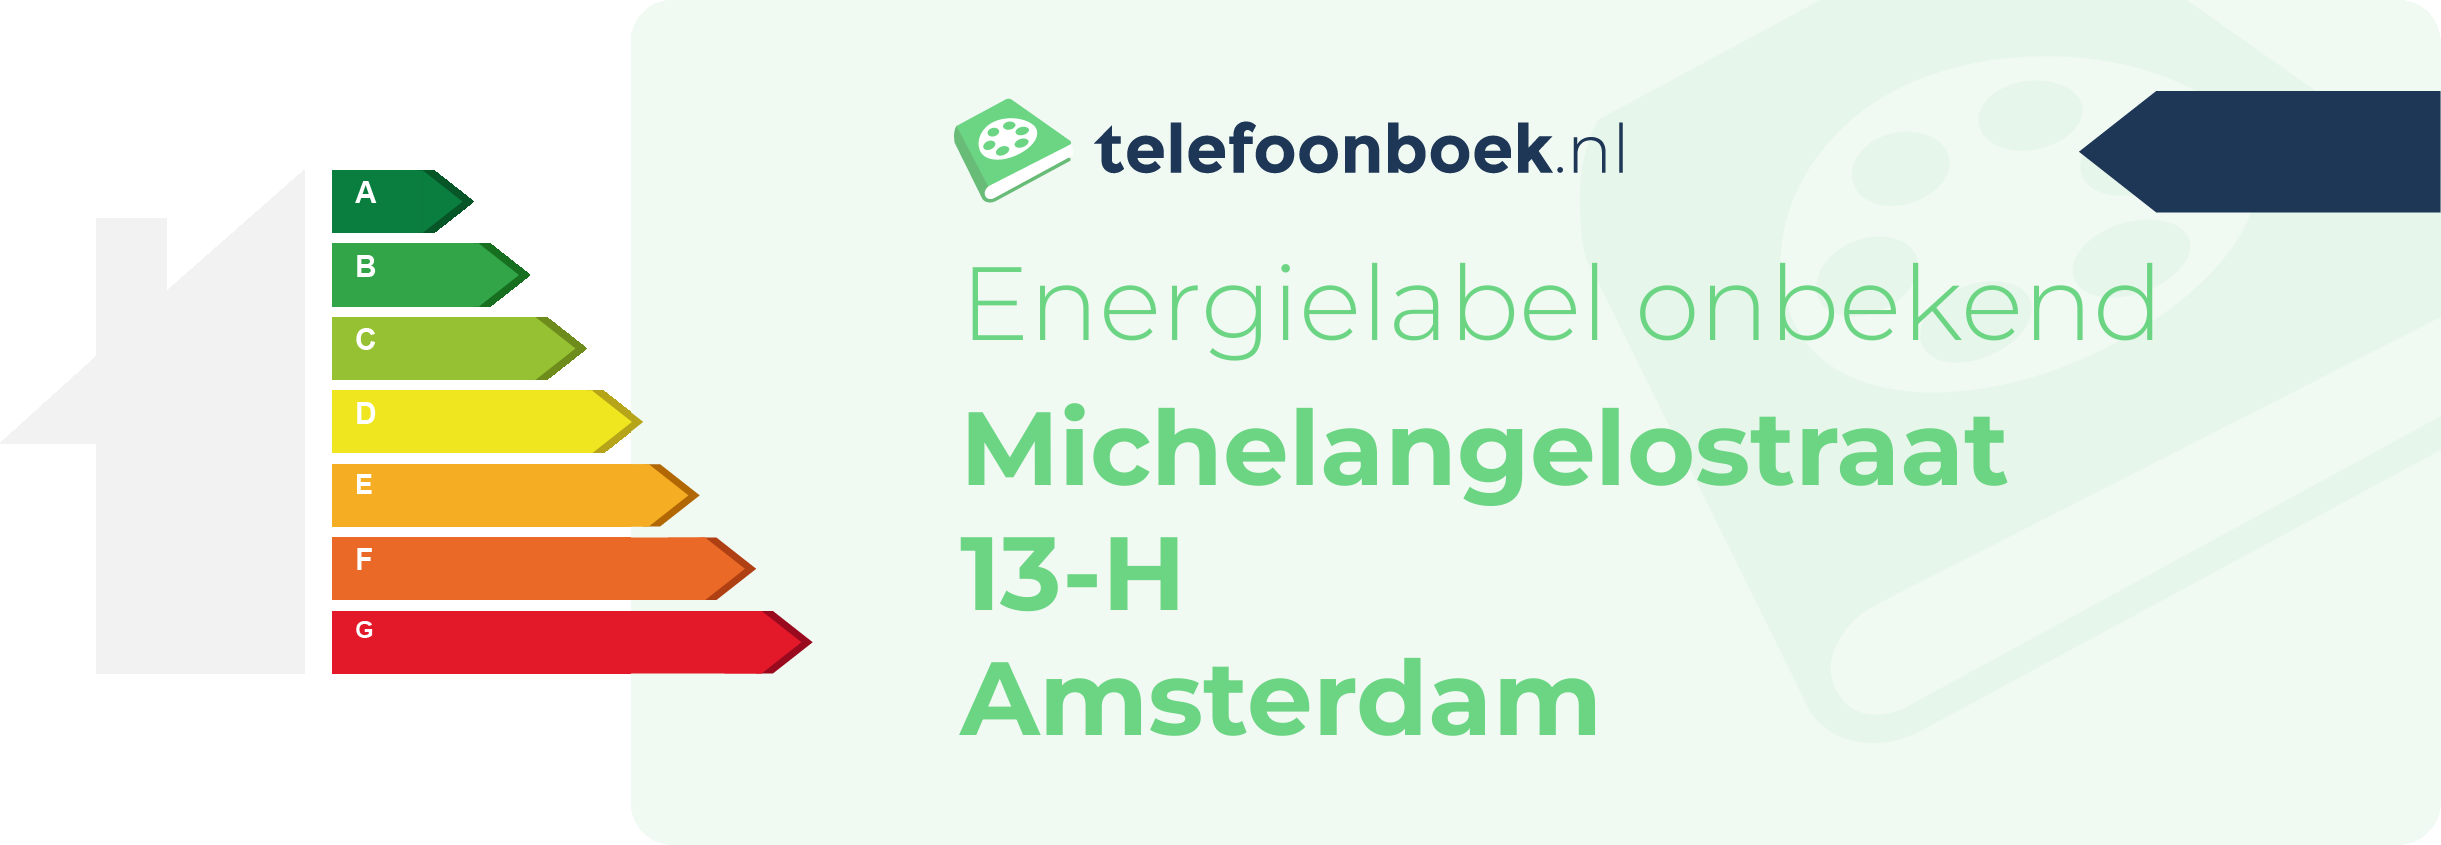 Energielabel Michelangelostraat 13-H Amsterdam